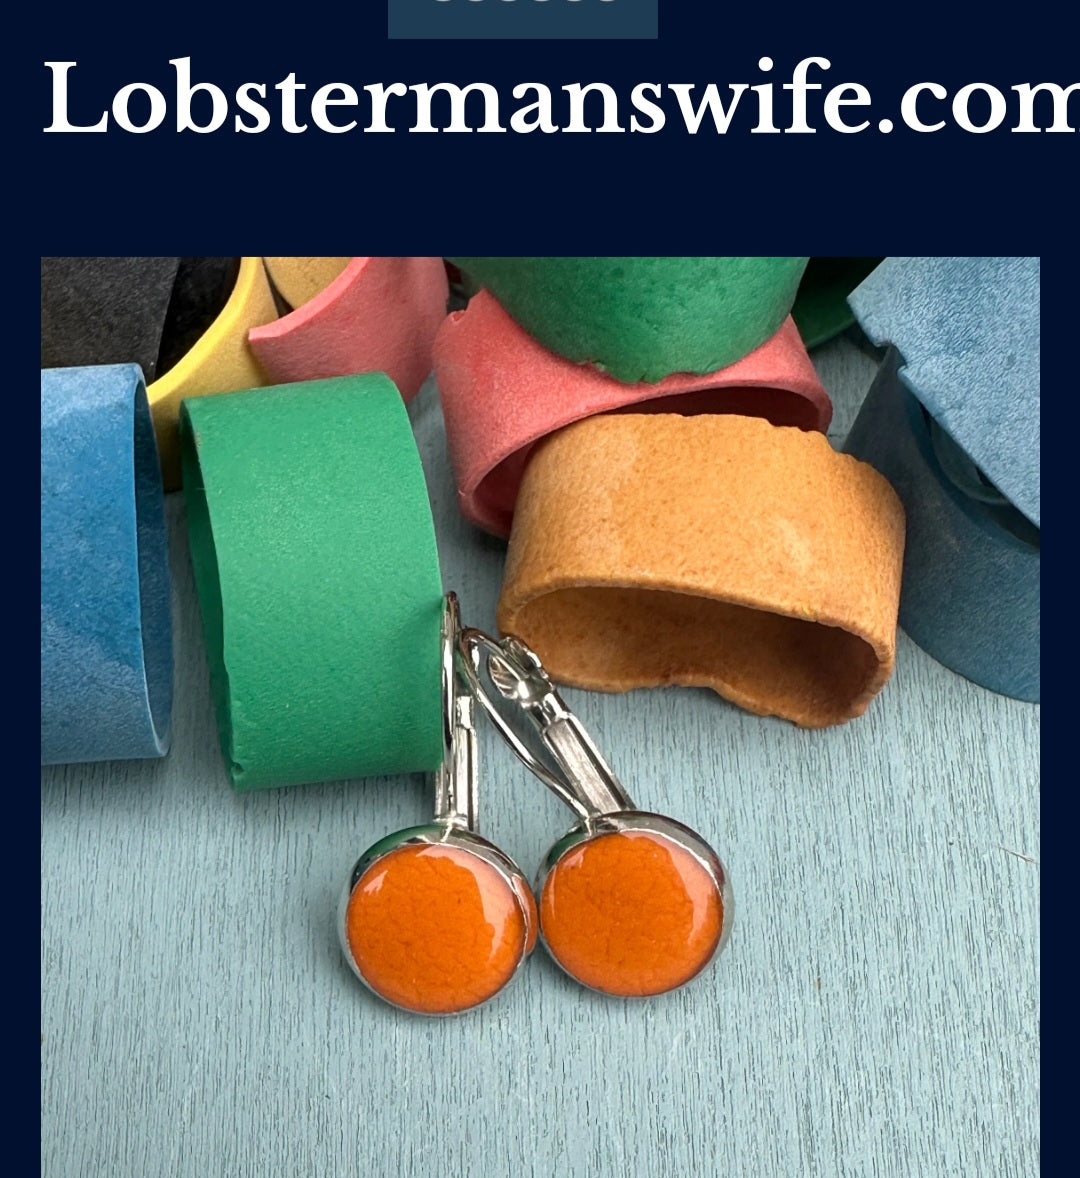 Lobster man's wife Jewelry